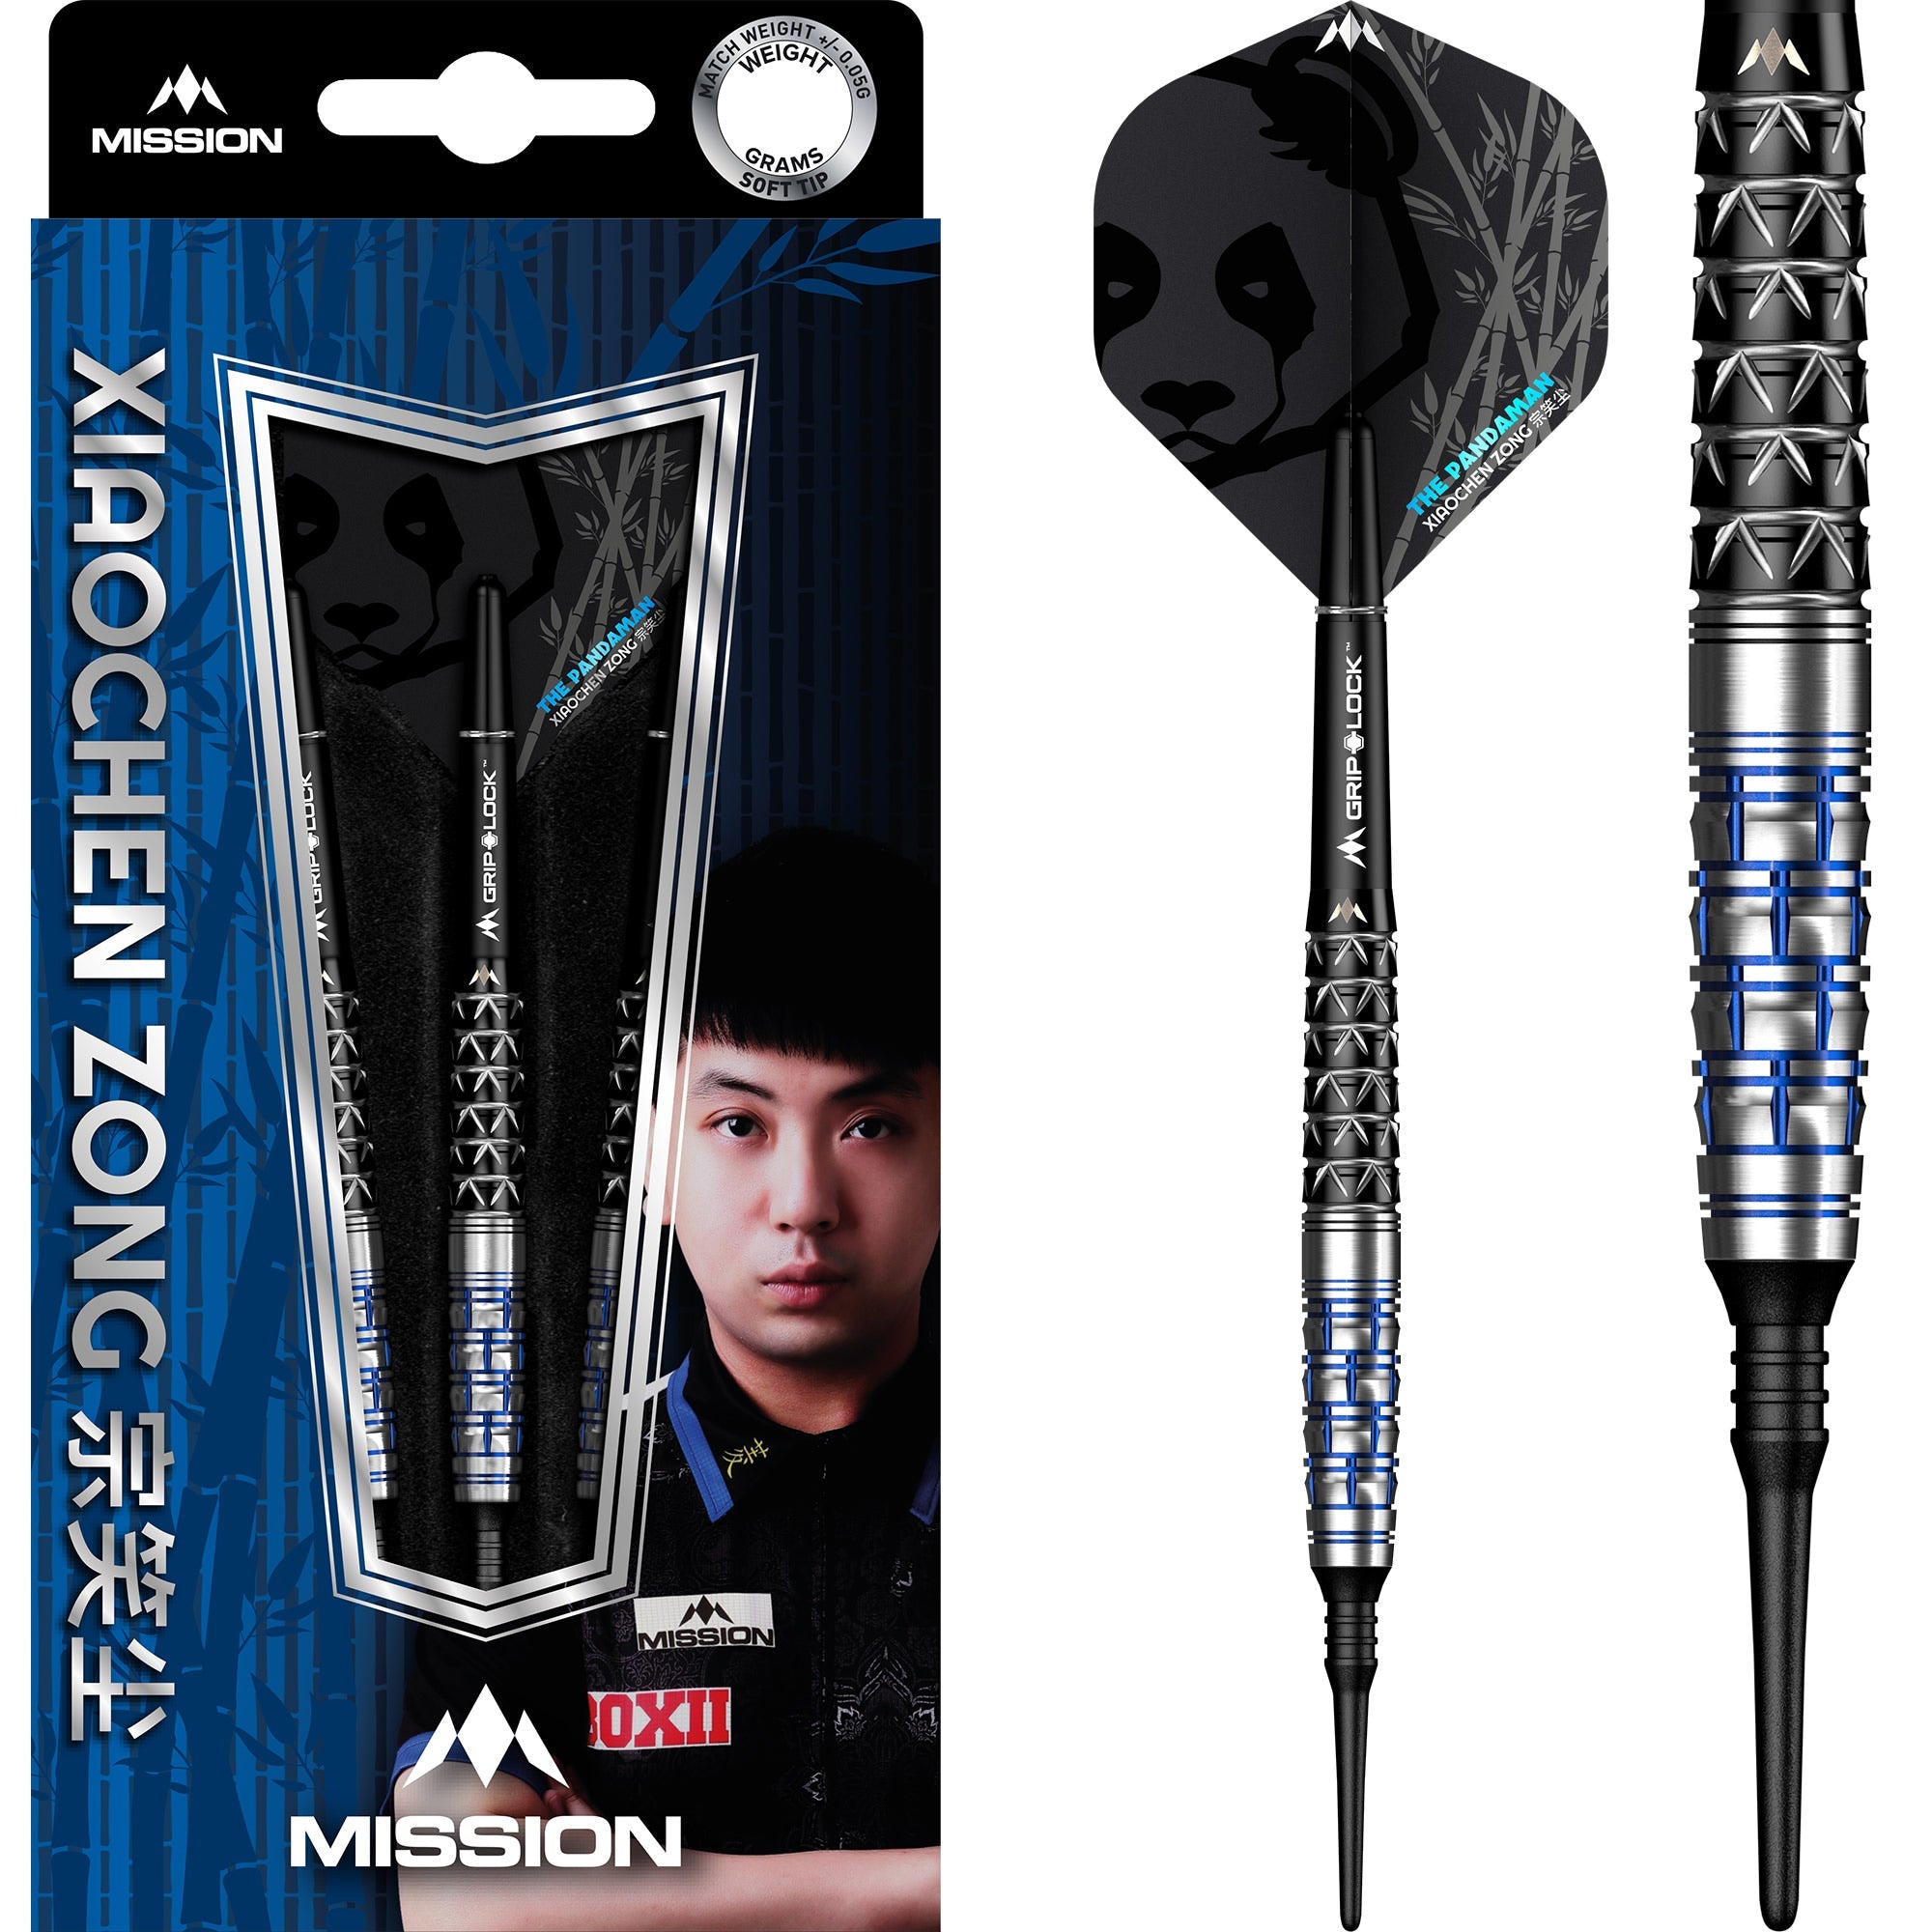 Mission Xiaochen Zong Darts - Soft Tip - Black & Blue